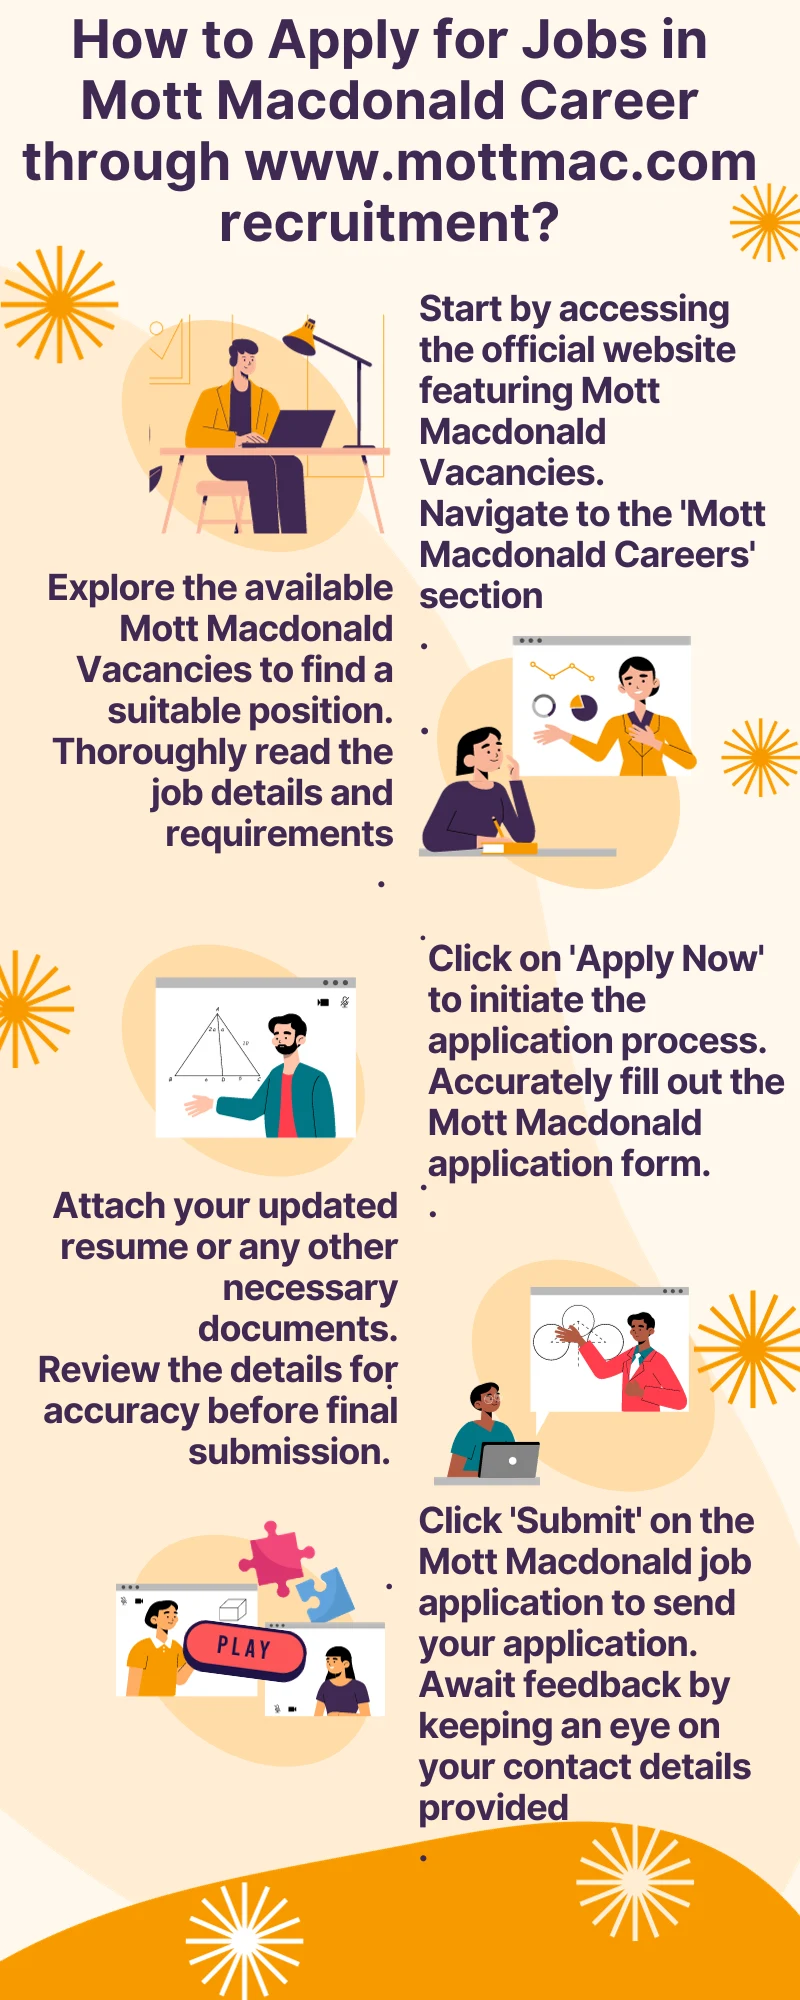 How to Apply for Jobs in Mott Macdonald Career through www.mottmac.com recruitment?